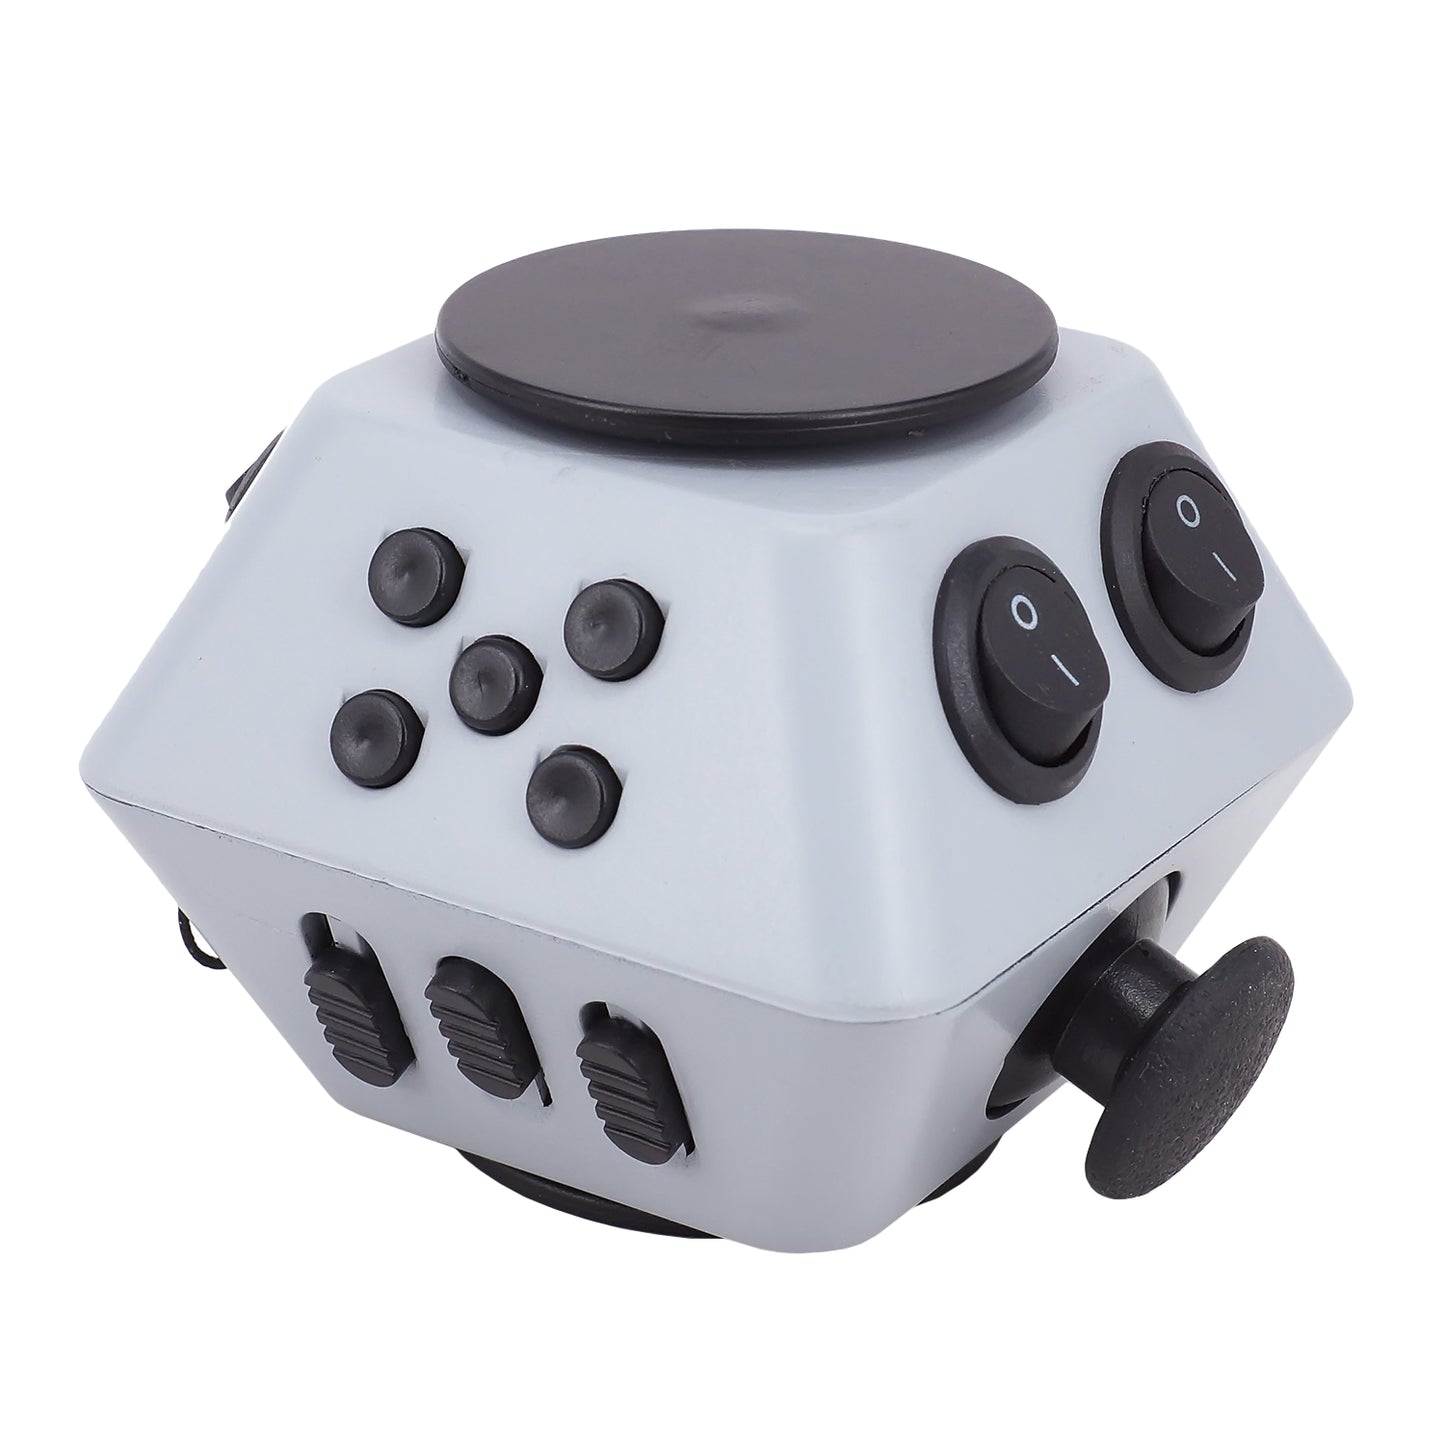  Spinner Cube Antistress Toy cashymart